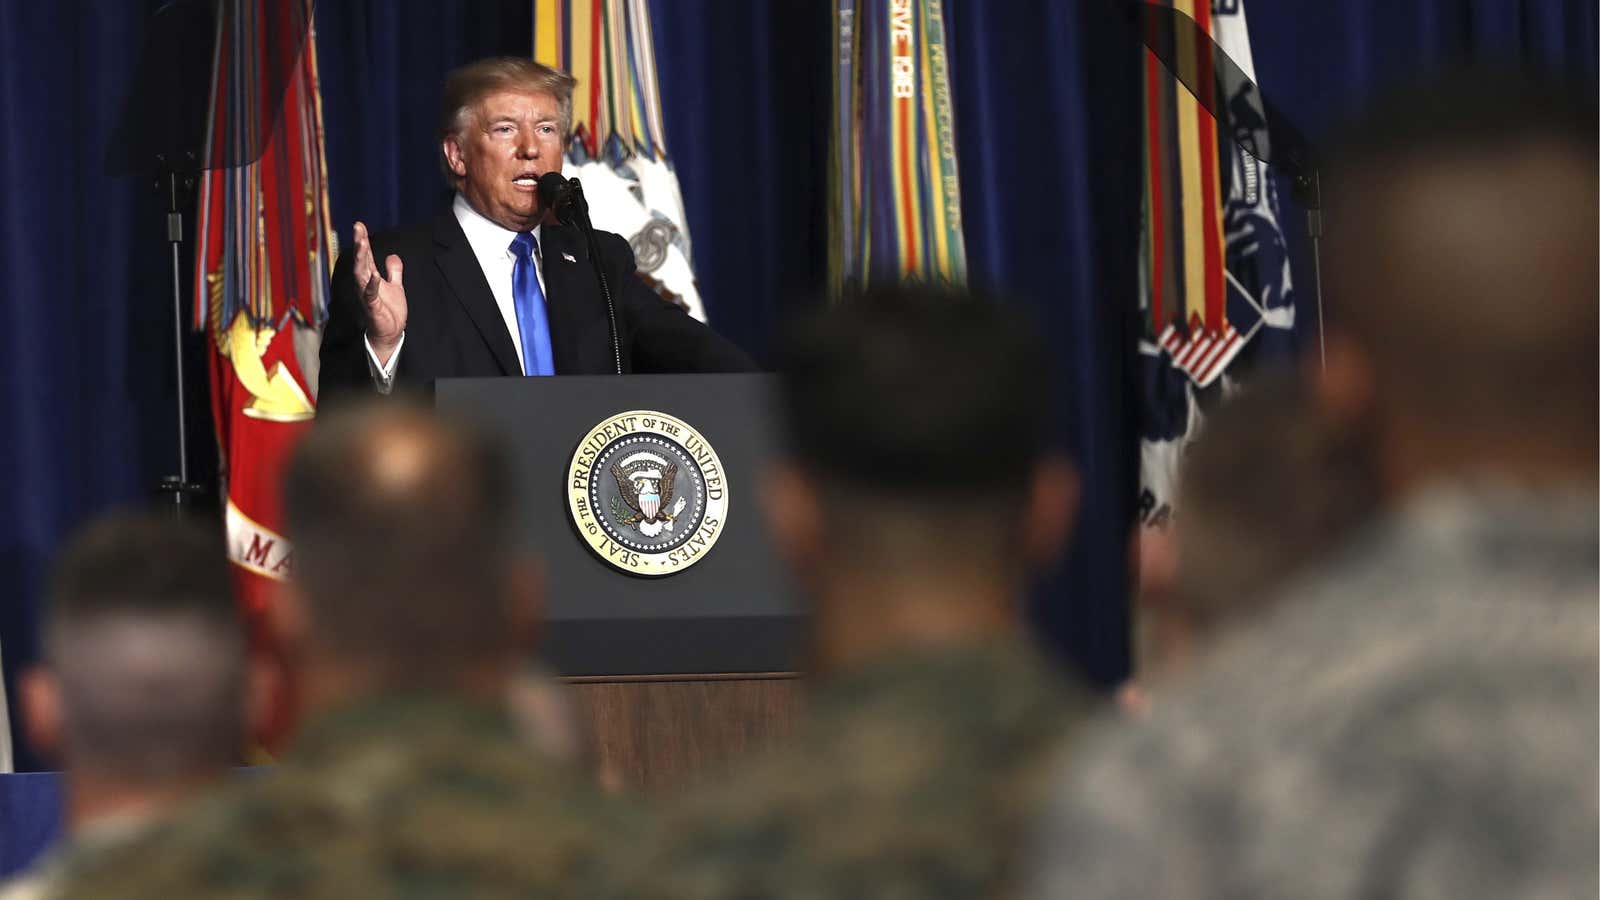 Donald Trump speaks at Fort Myer in Arlington Va., Monday, Aug. 21, 2017.